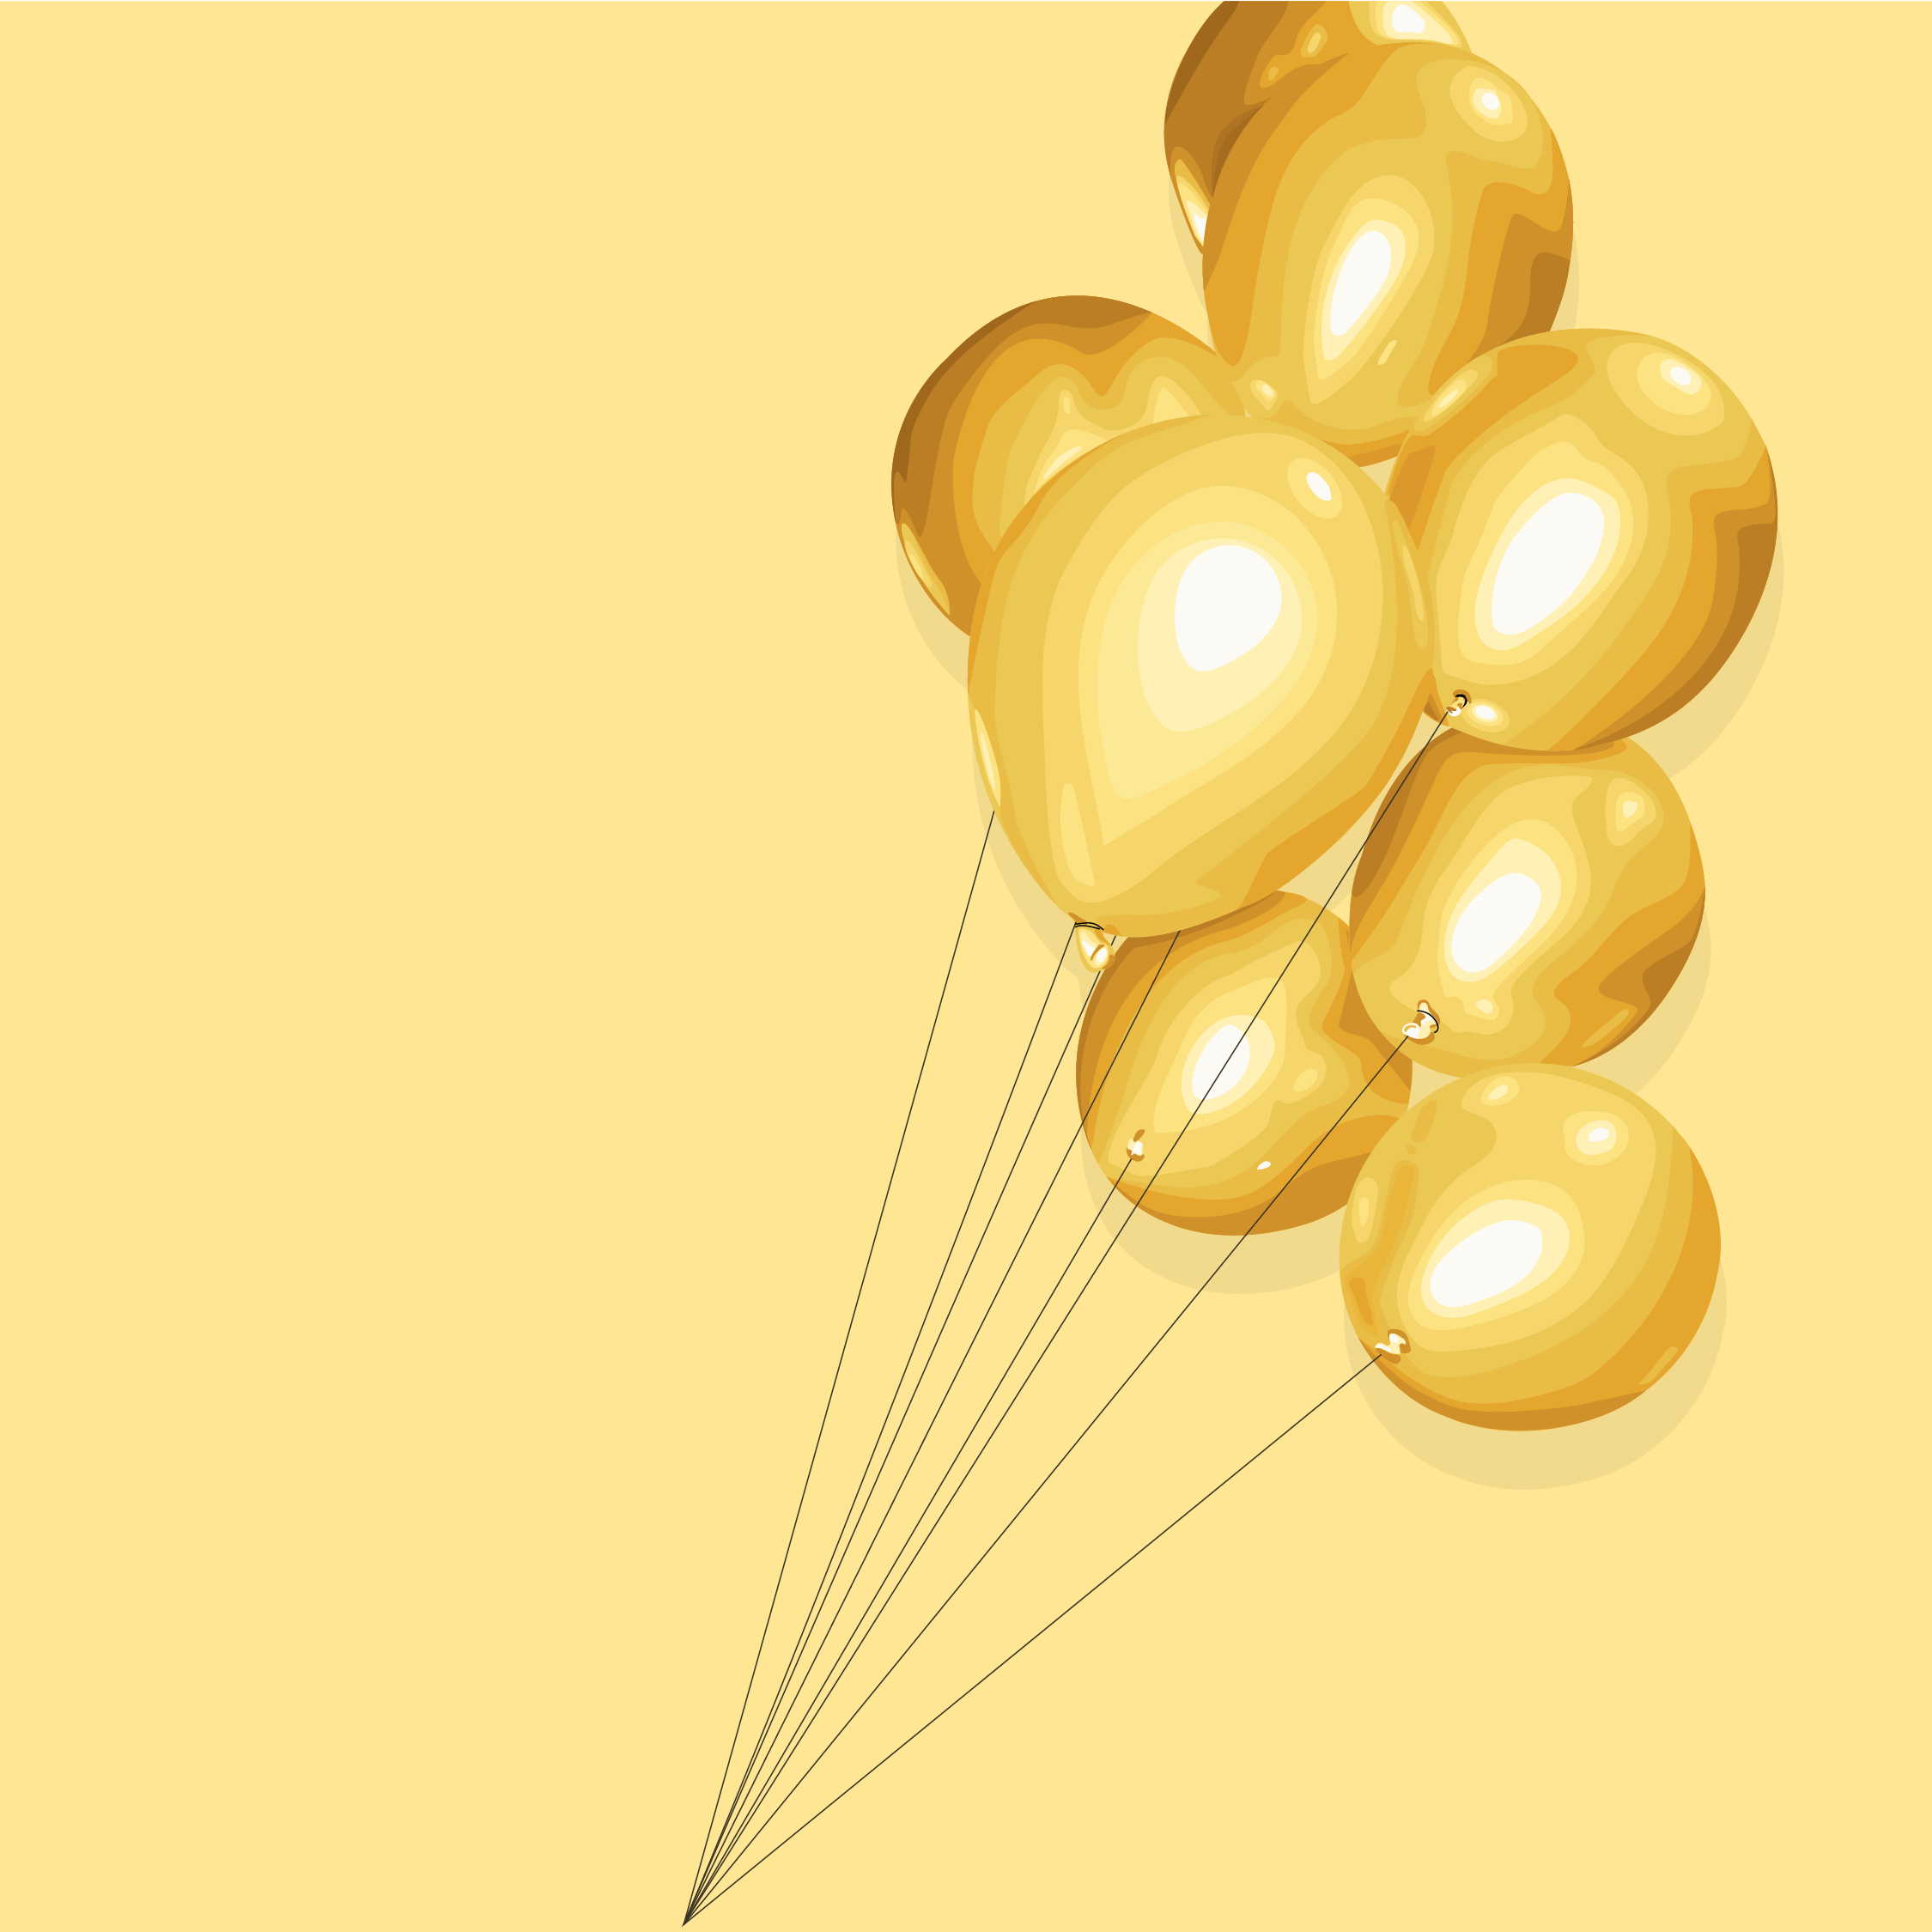 carydraws-balloons